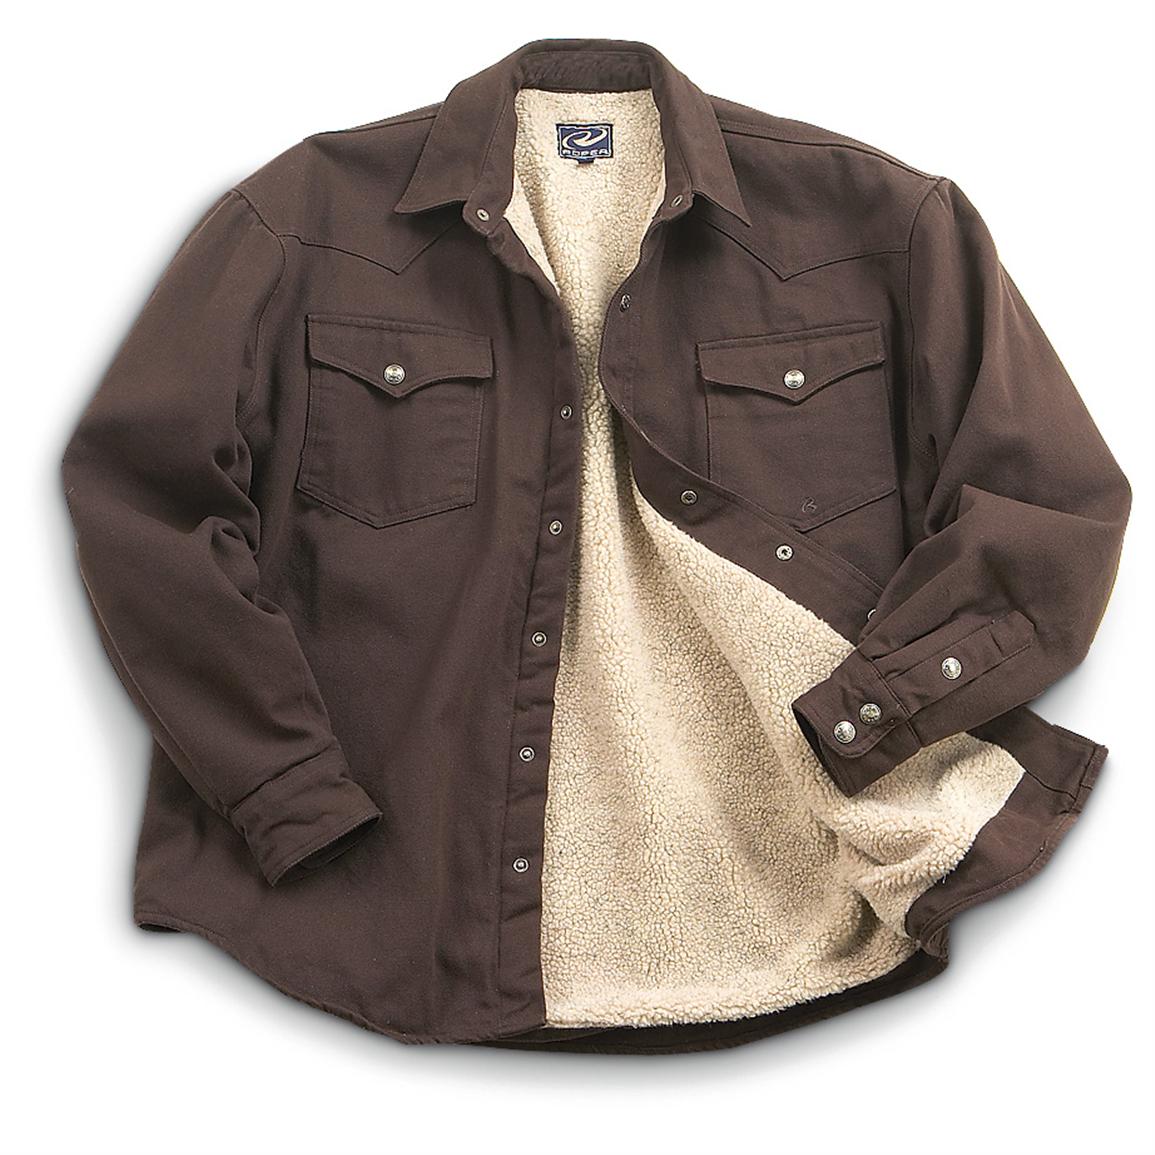 Roper® Canvas Shirt / Jacket - 144504, Insulated Jackets & Coats at